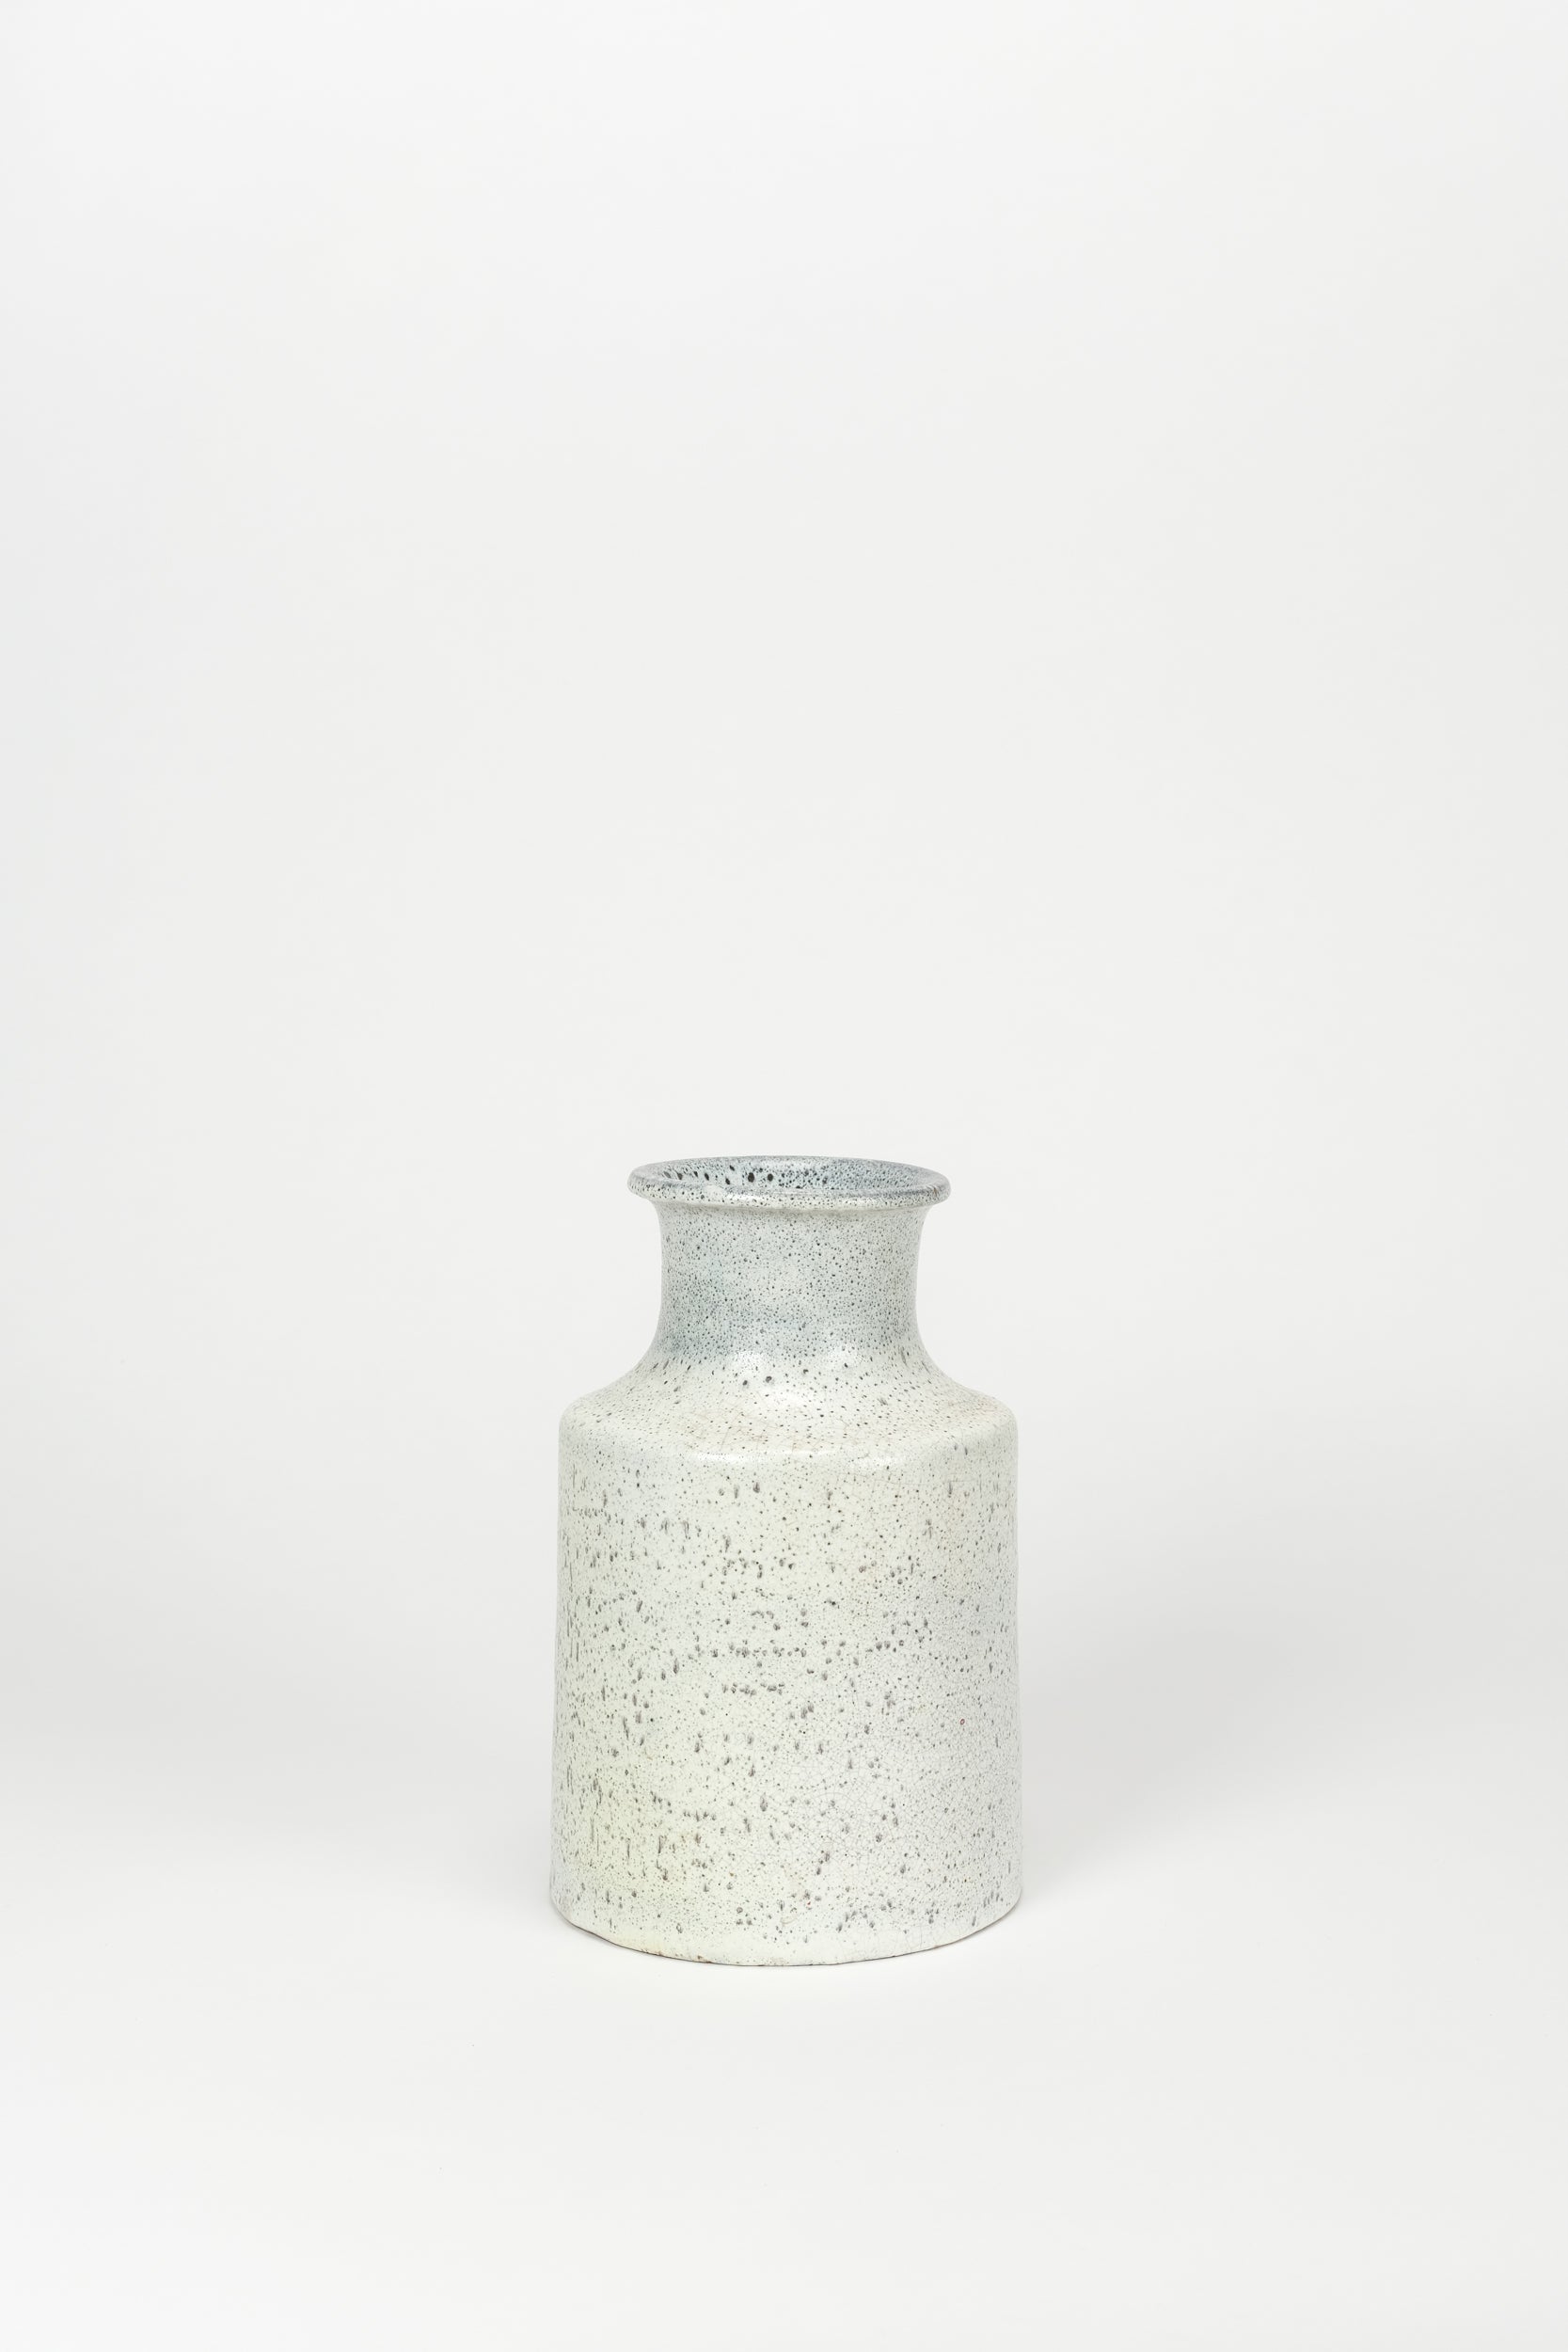 André Freymond ceramic Vase 60s